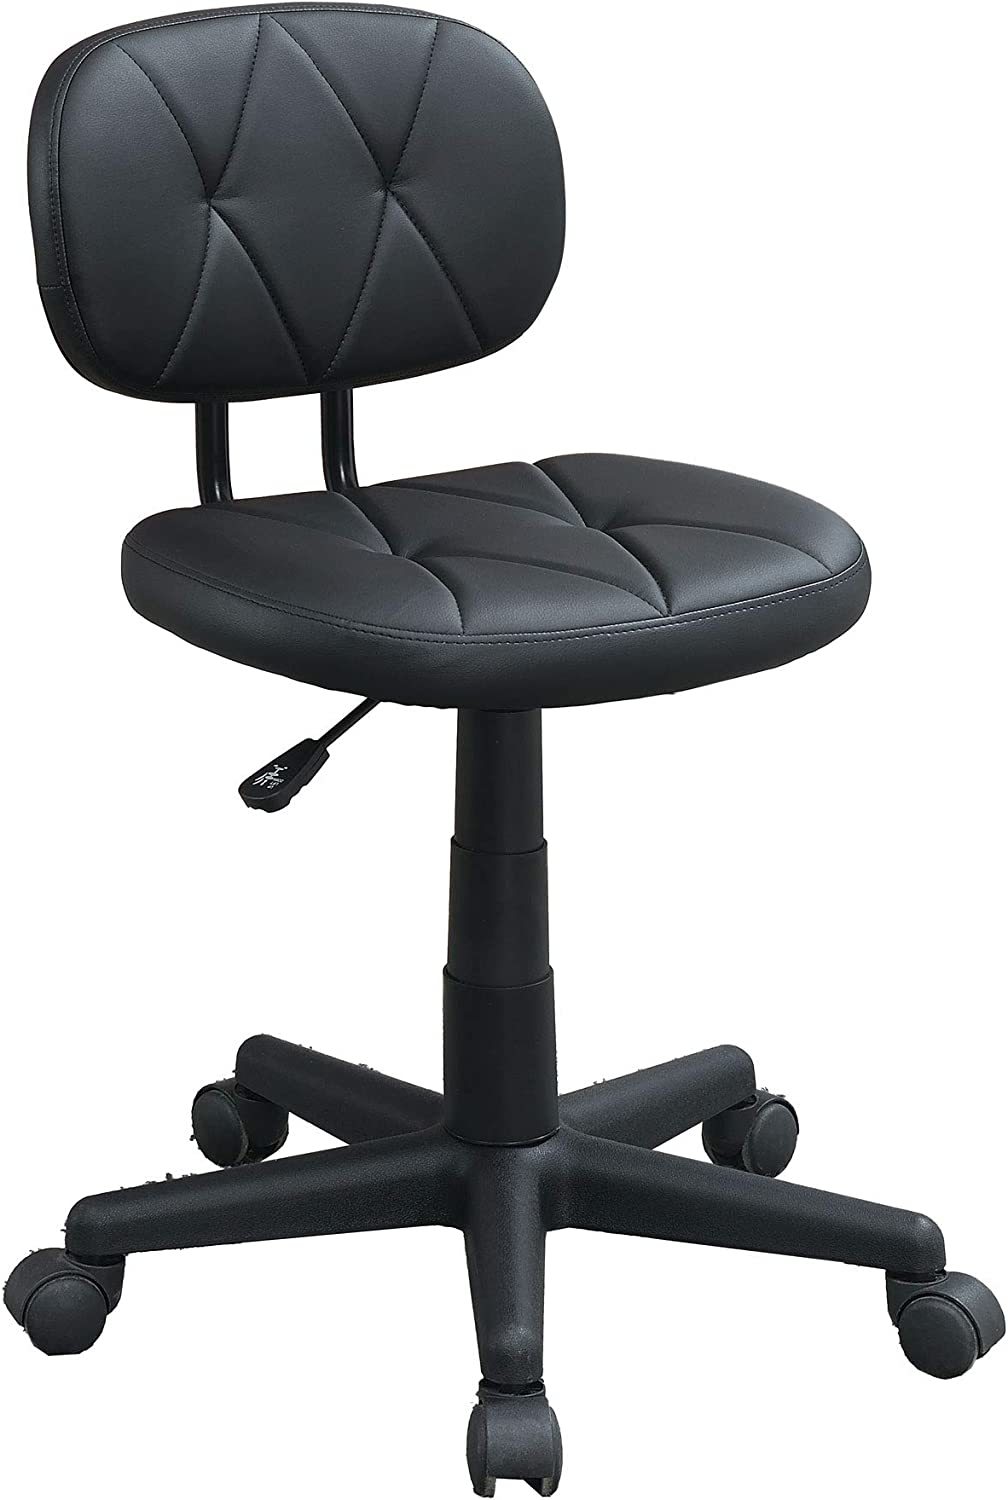 Black Poundex Wilson Office Chair. - $58.92